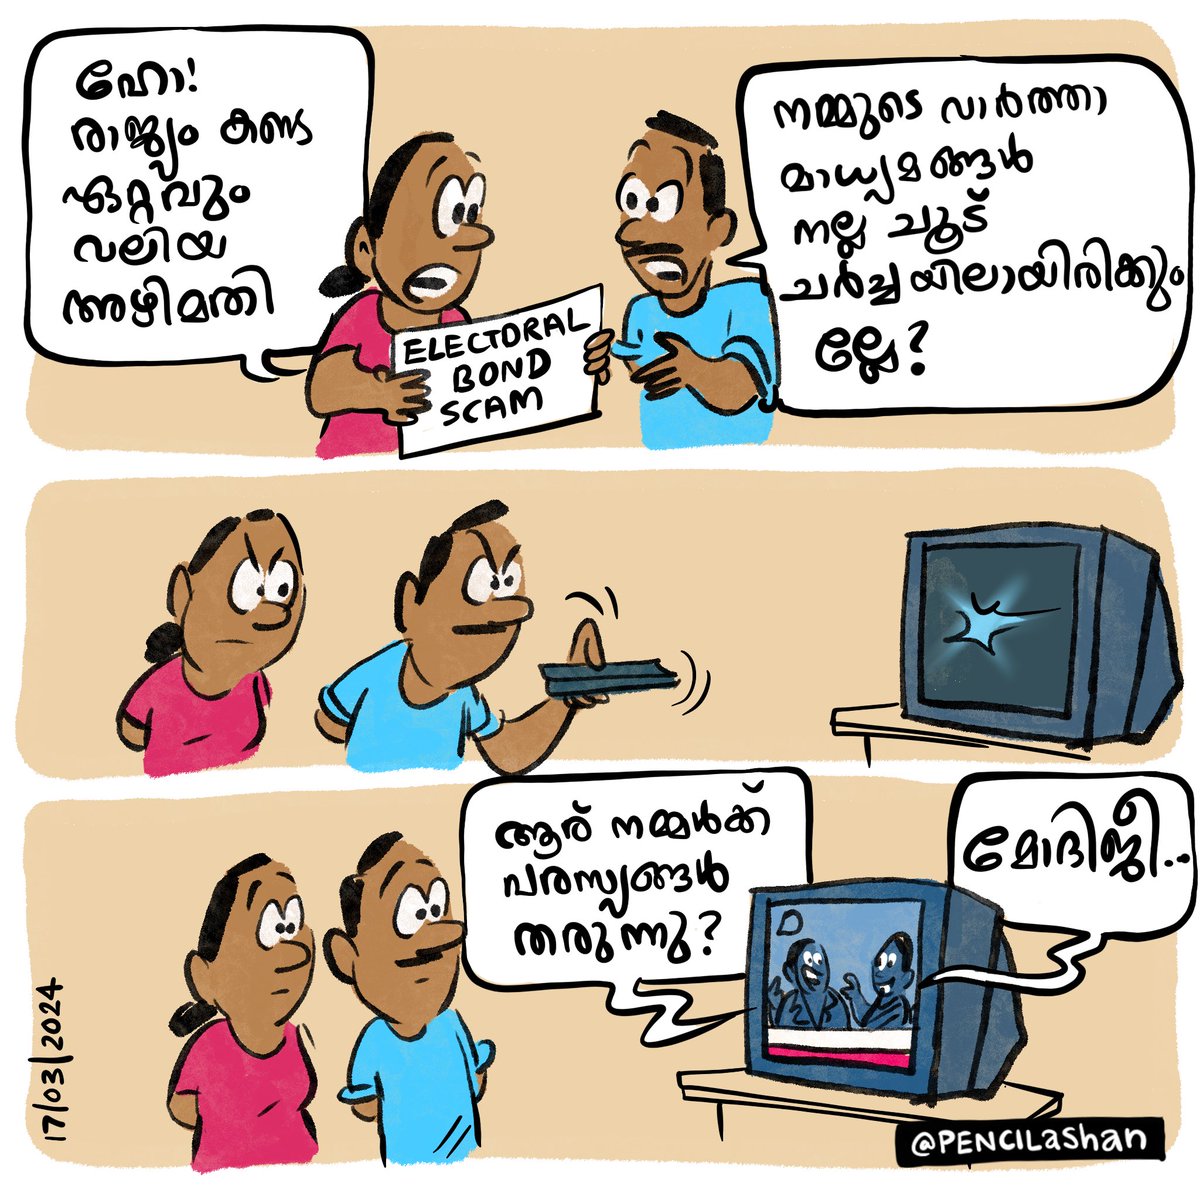 😏😏😏 #indiannewsmedias #malayalamnewschannels #electrolbondscam #electrolbonds #godimedia